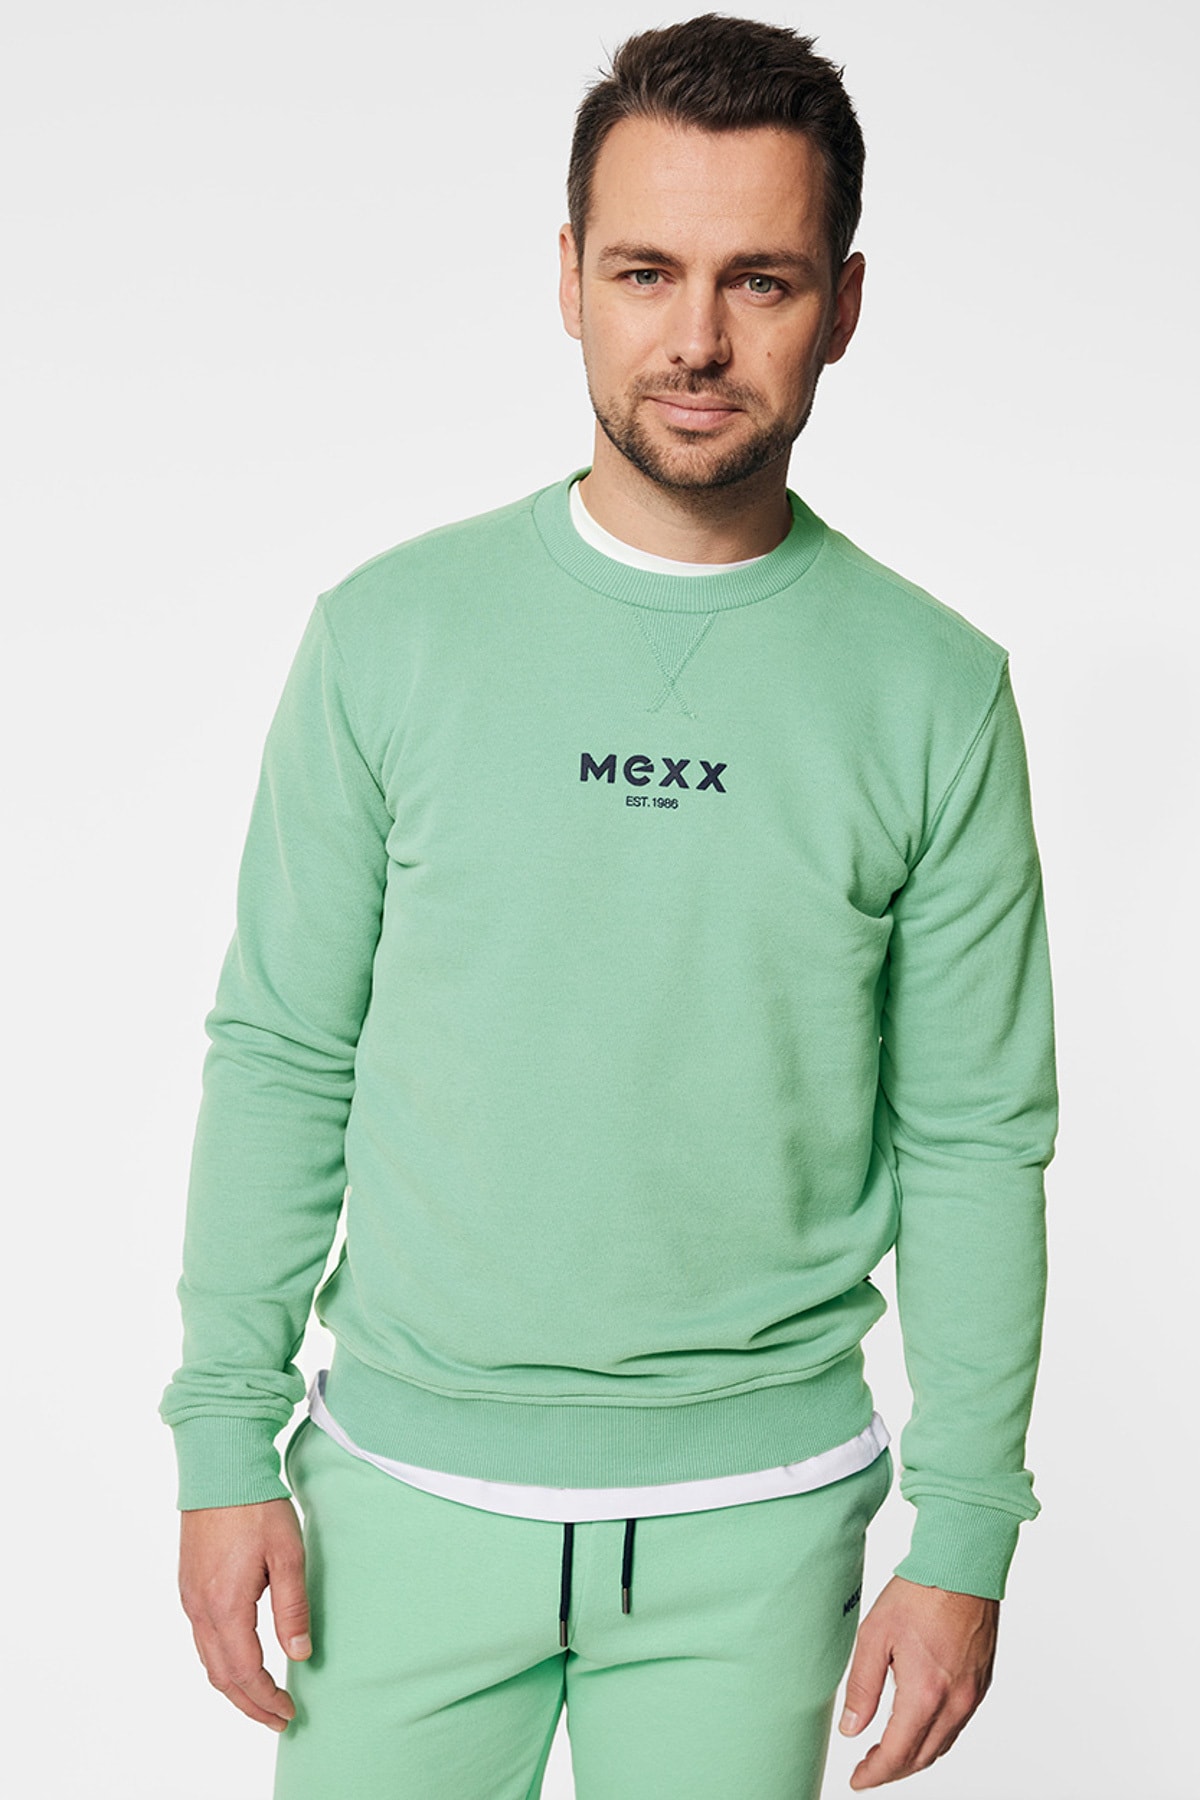 MEXX Sweatshirt Grün Regular Fit Fast ausverkauft